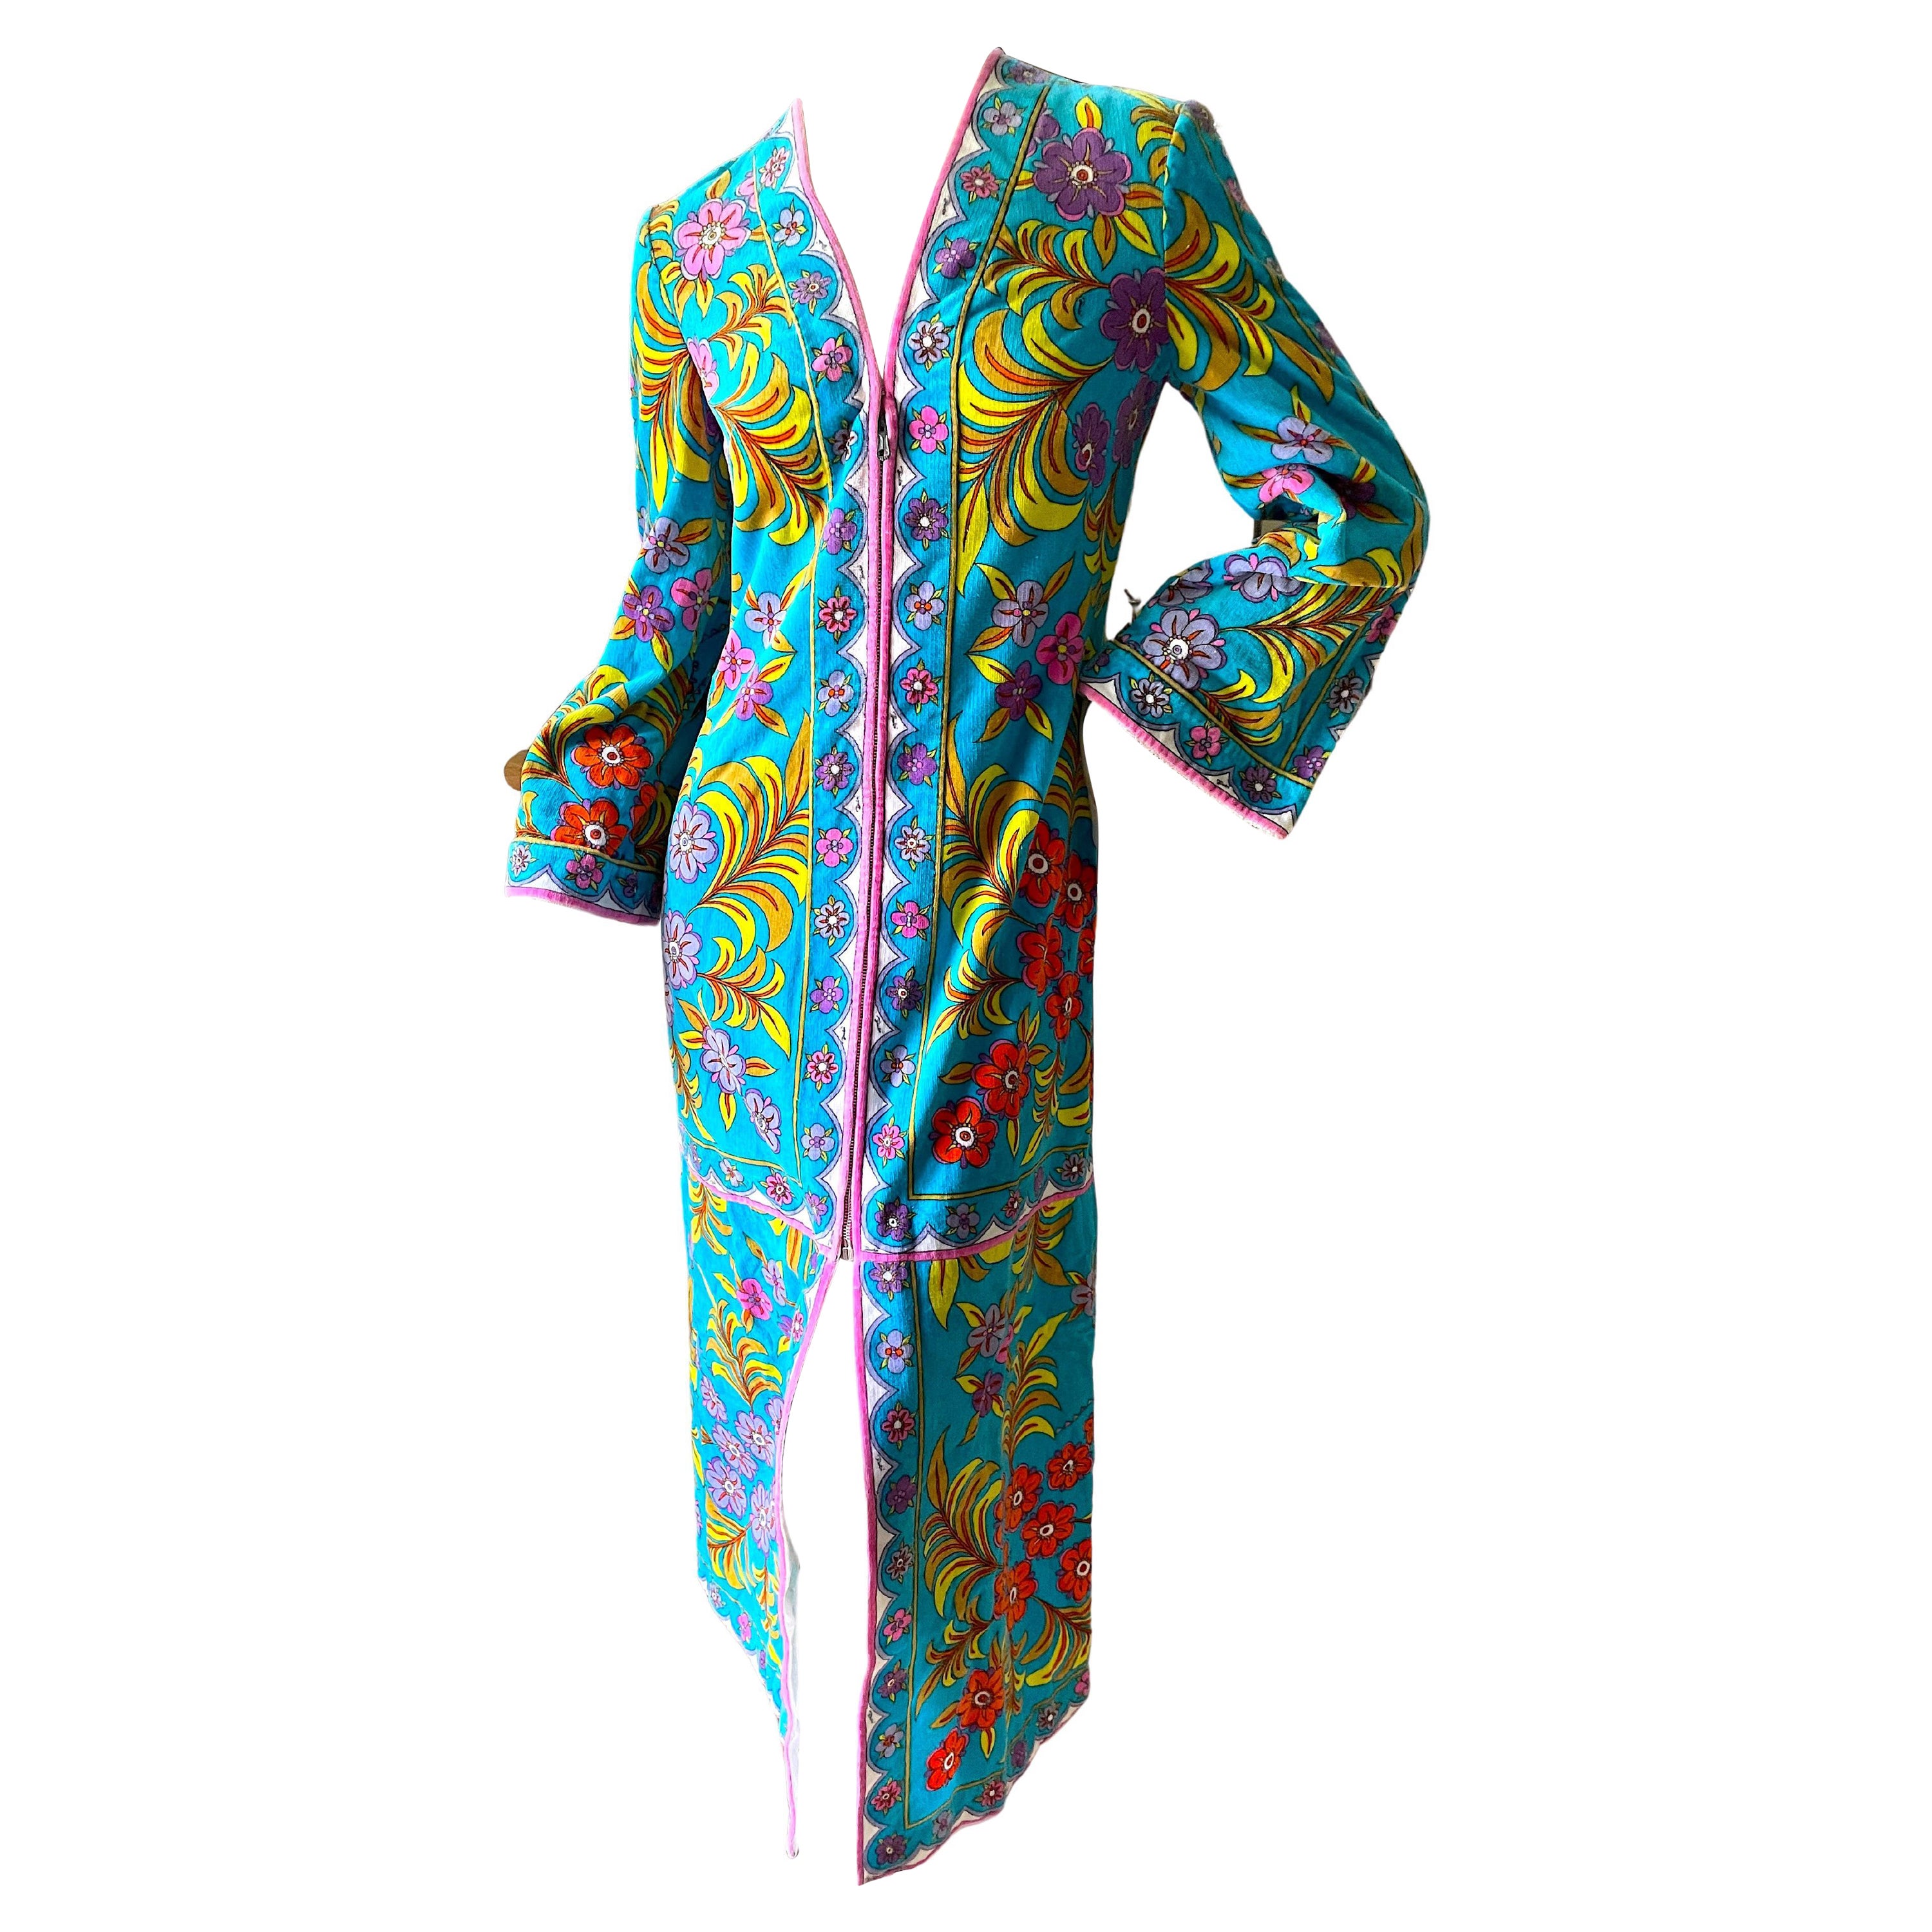 Emilio Pucci Colorful 1960's Terry Cloth Cotton Beach Caftan Dress  For Sale